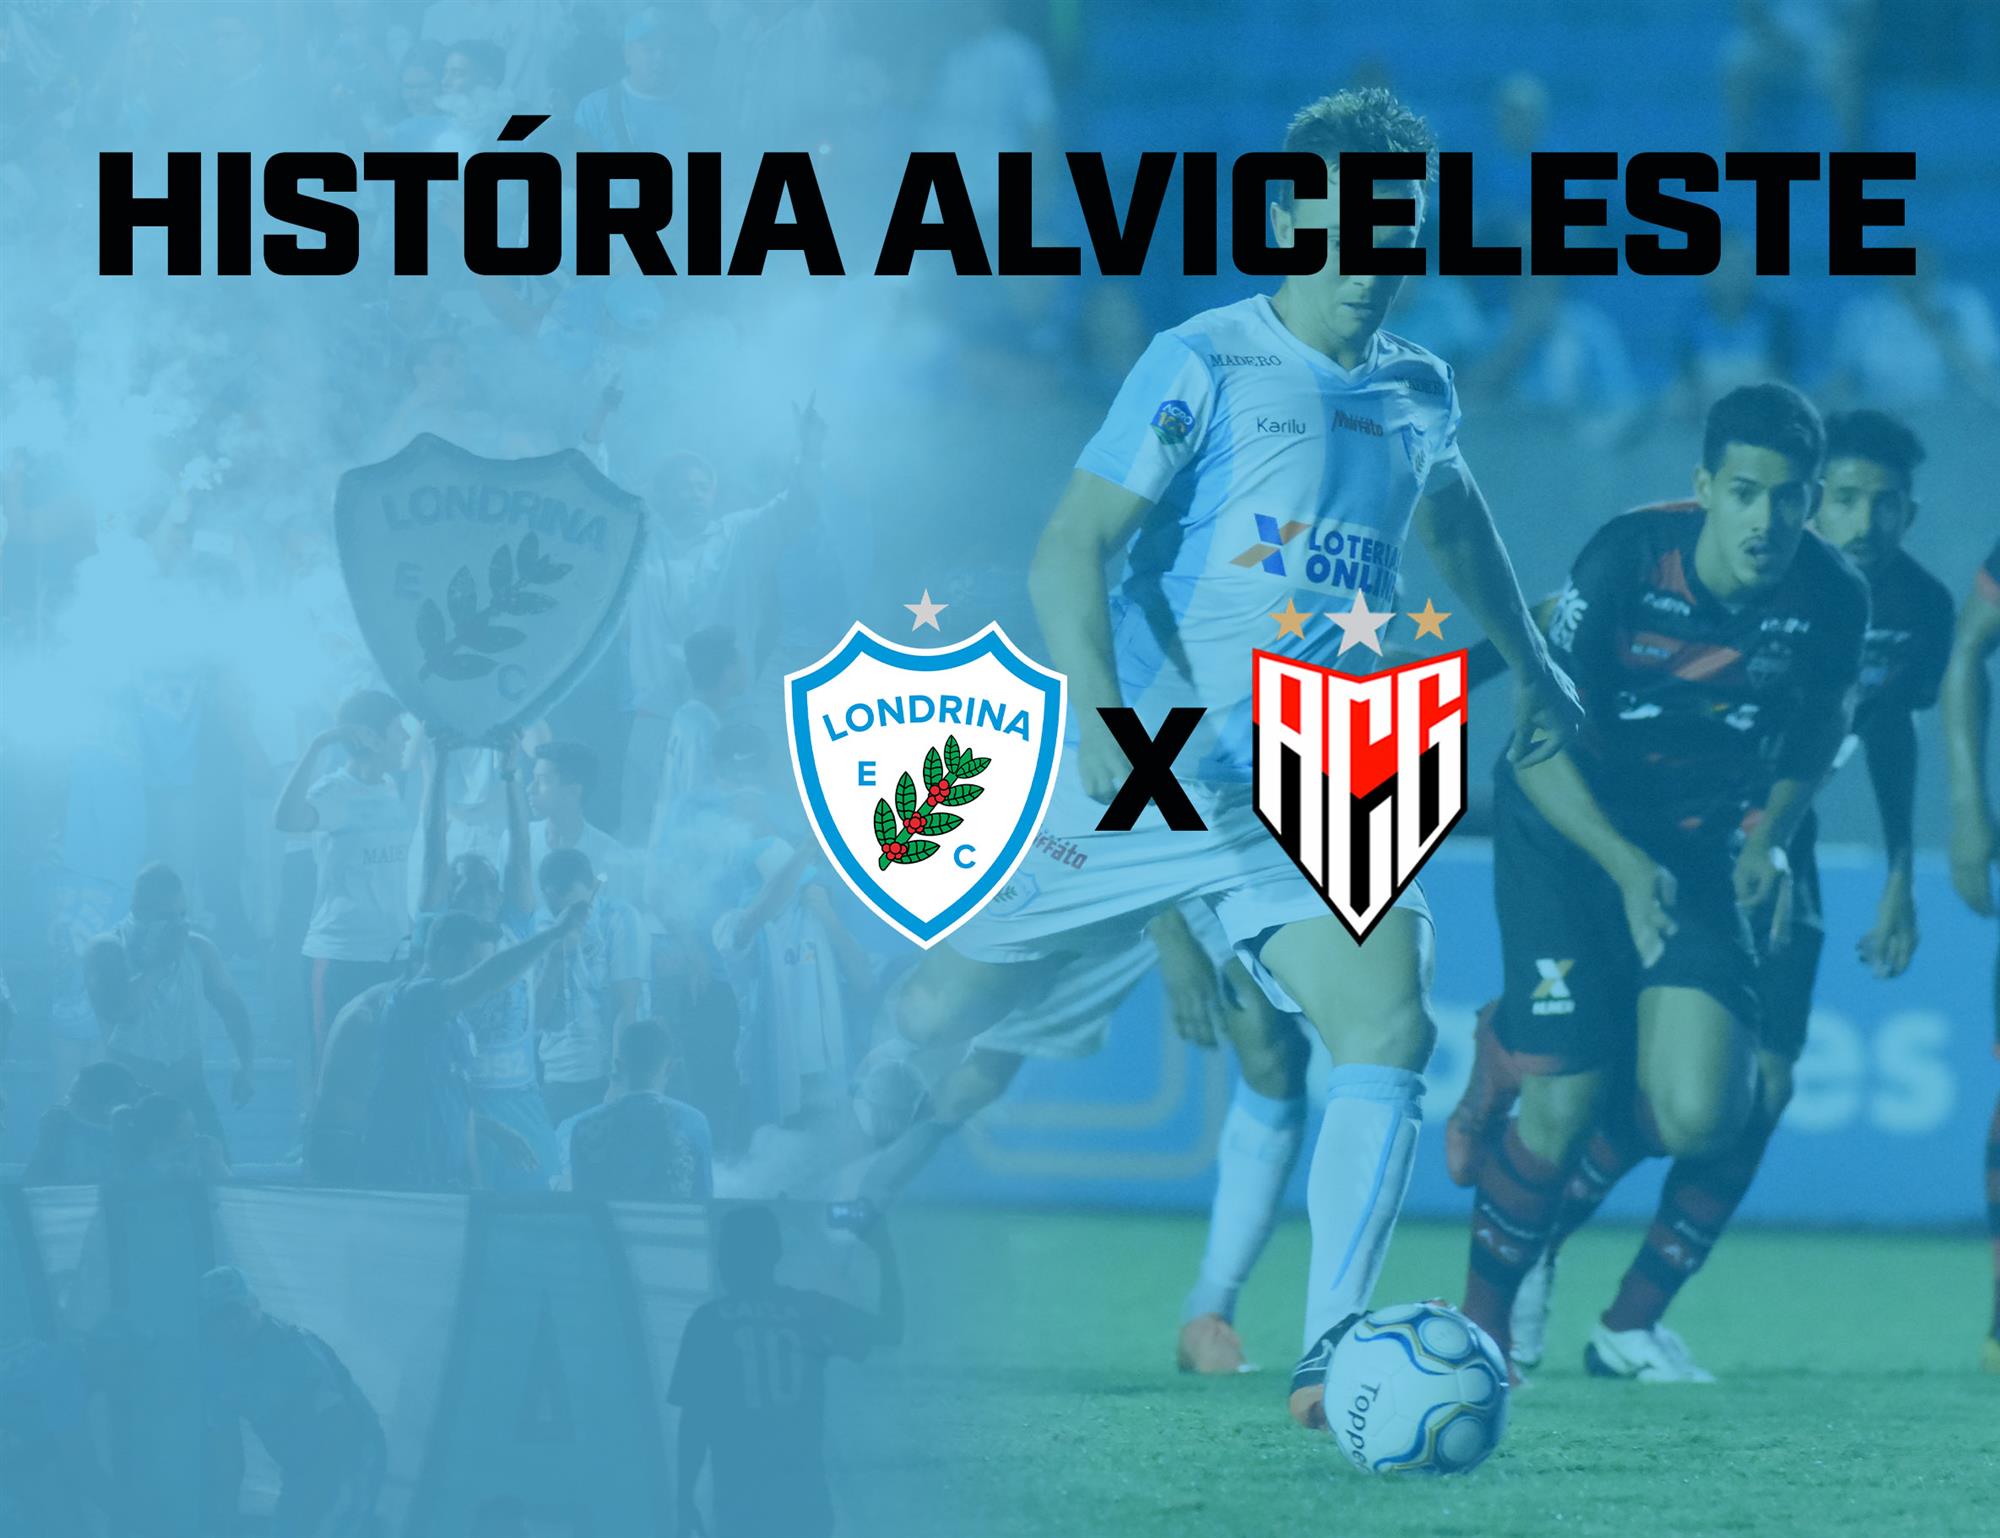 História Alviceleste: Londrina x Atlético Goianiense